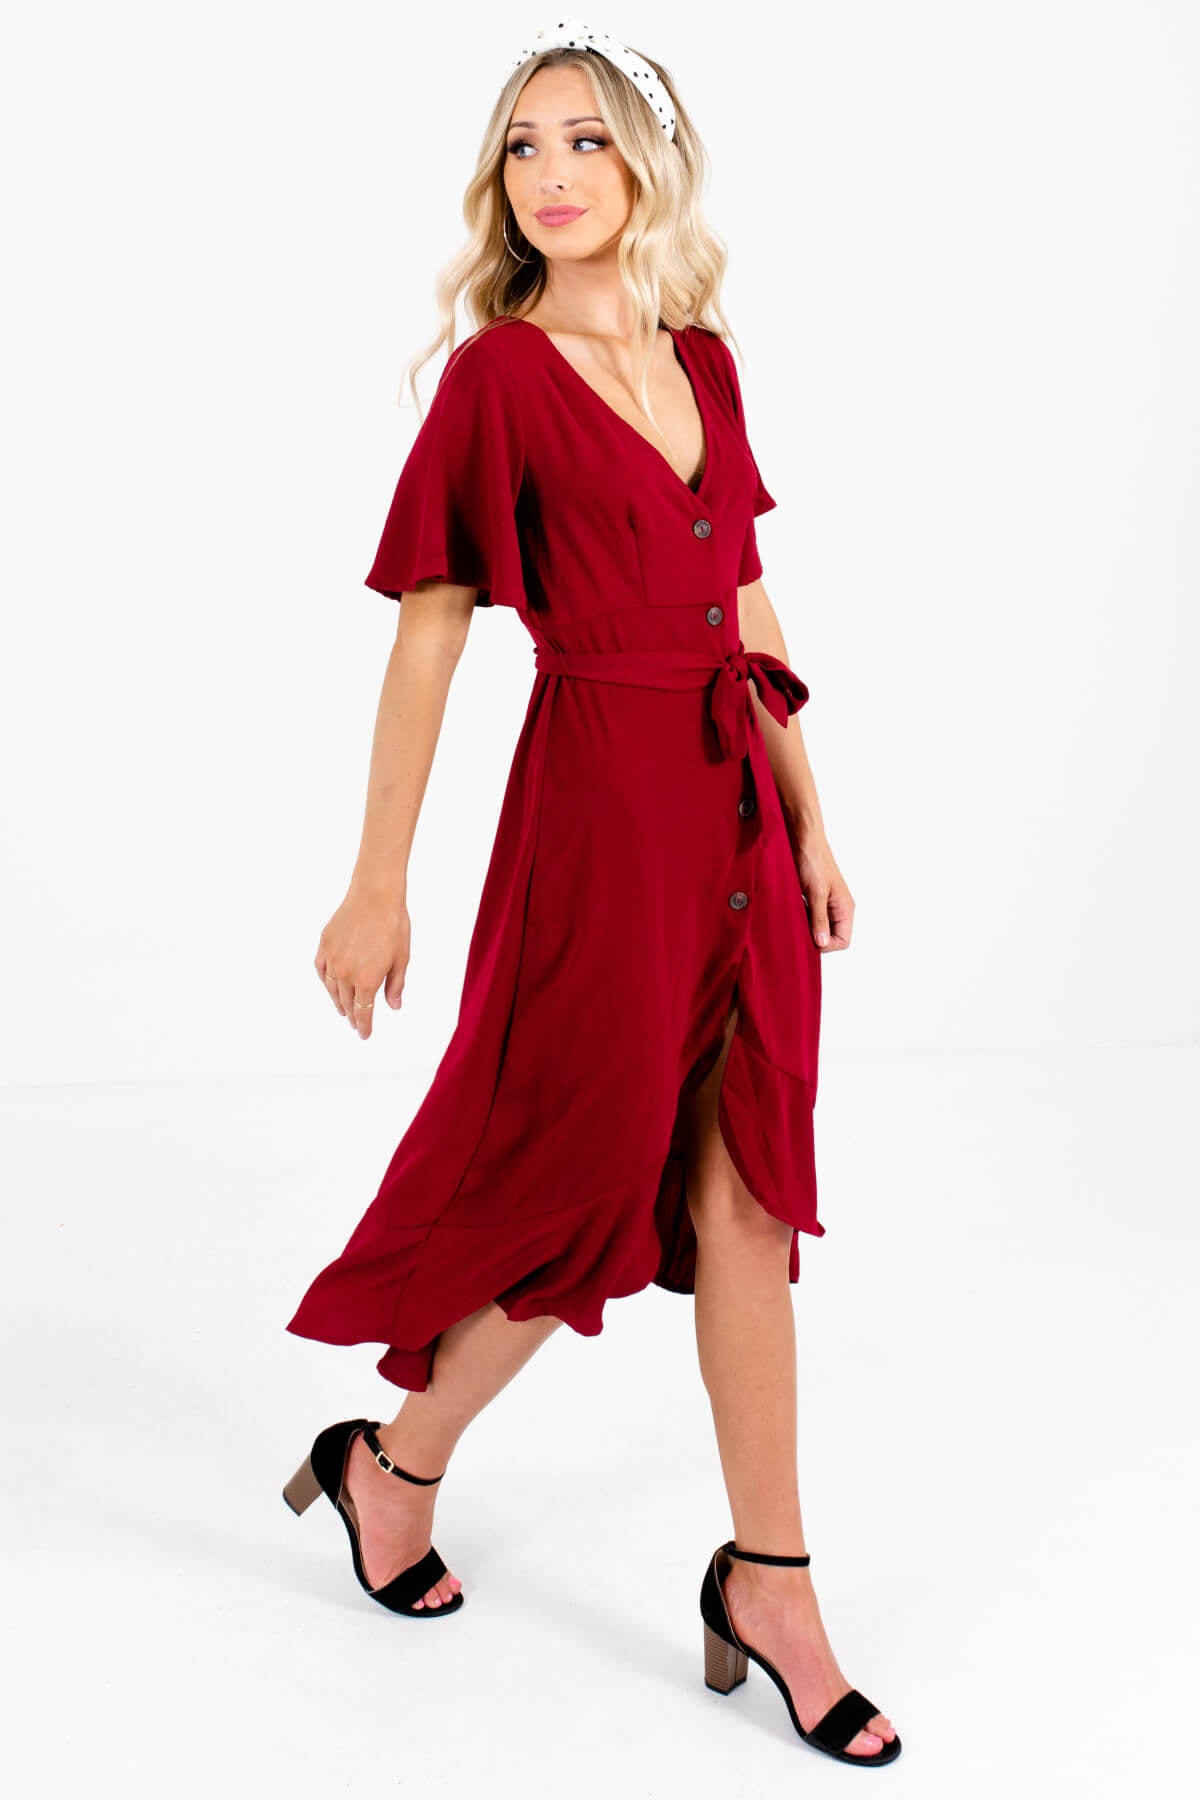 burgundy boutique dress